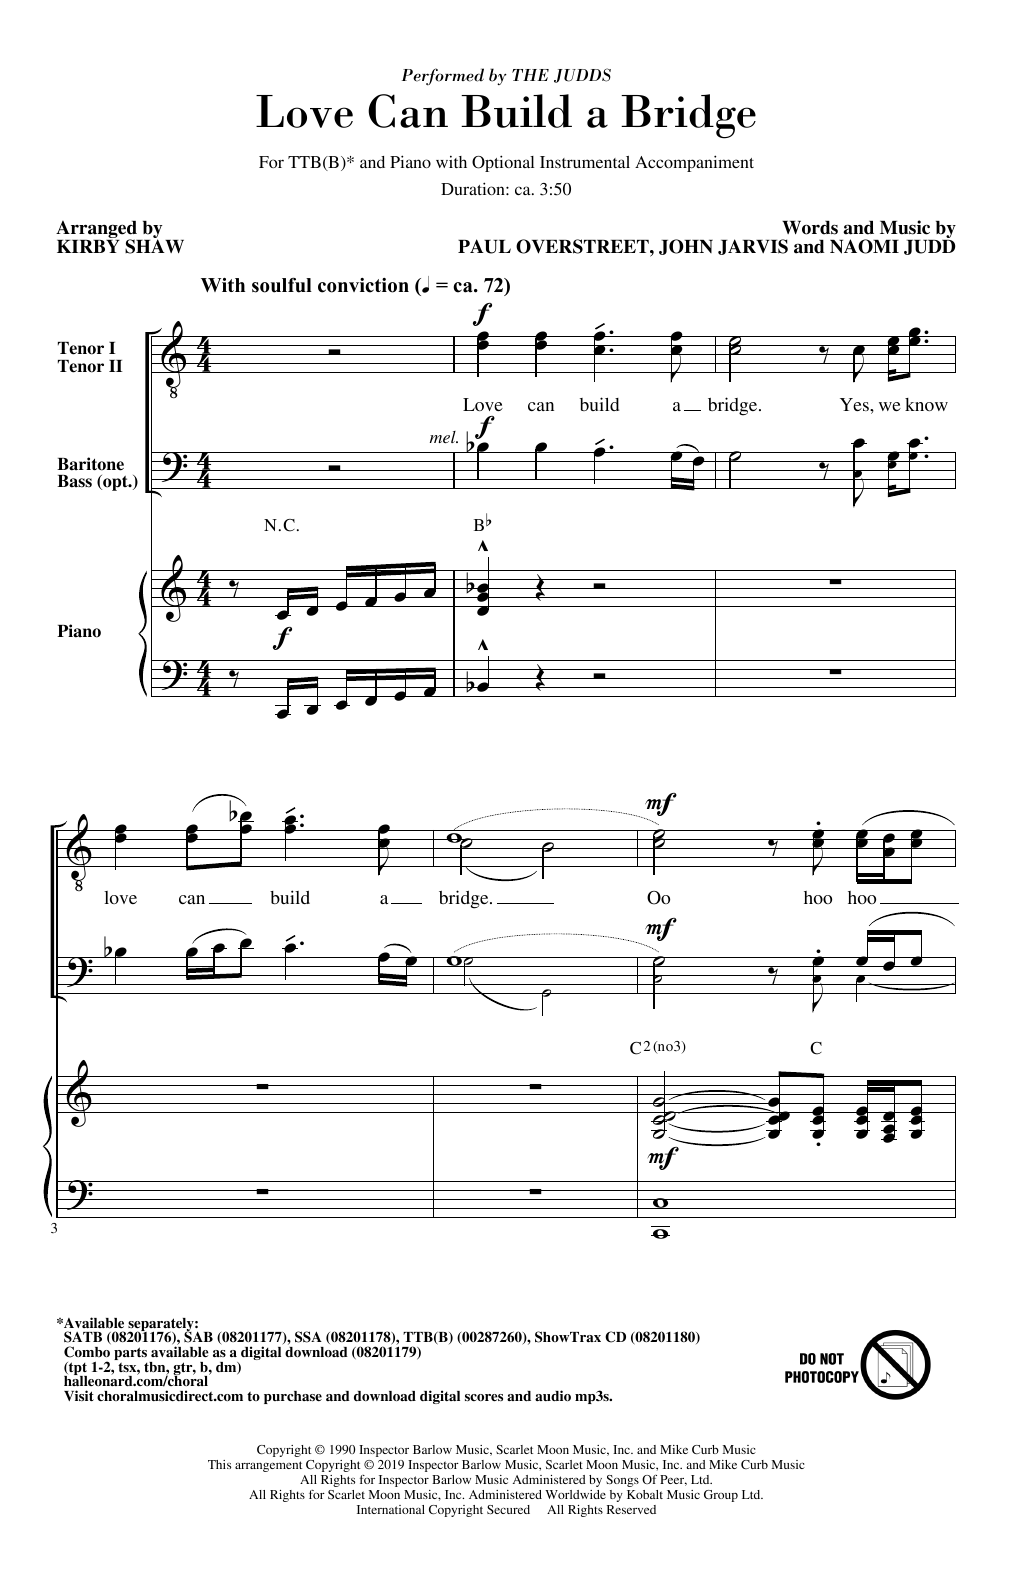 The Judds Love Can Build A Bridge (arr. Kirby Shaw) Sheet Music Notes & Chords for TTBB Choir - Download or Print PDF